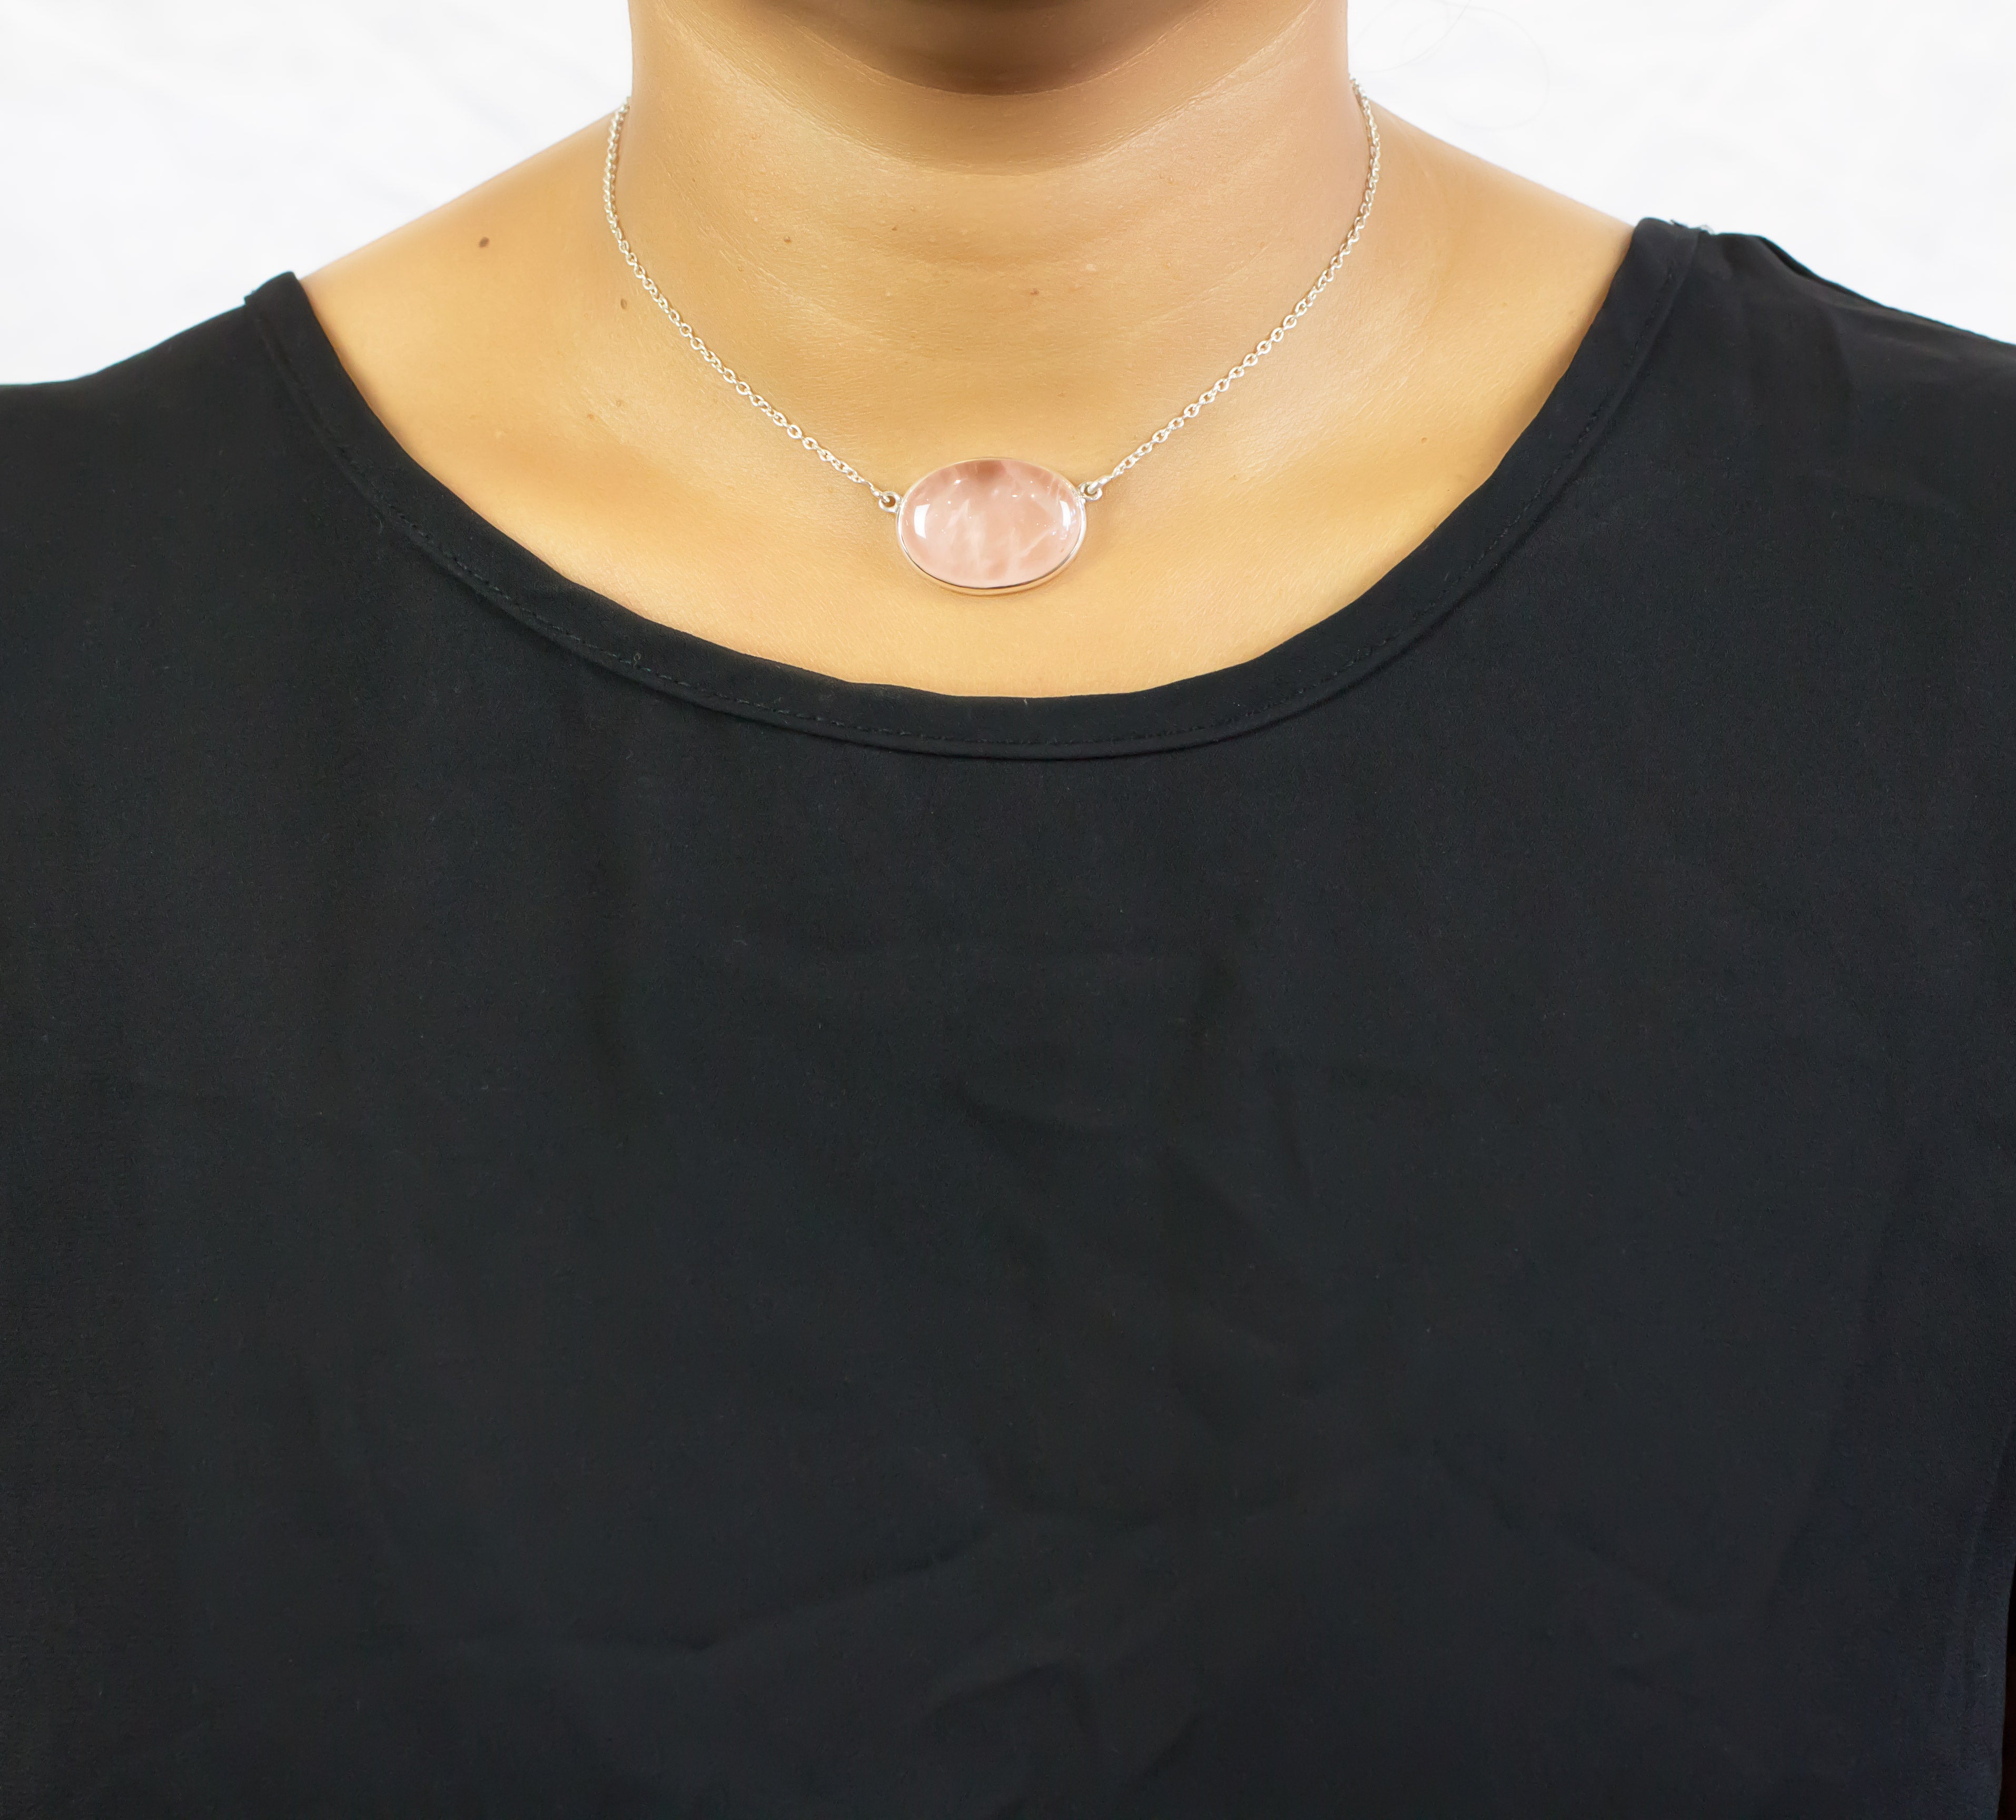 rose quartz necklace on Model